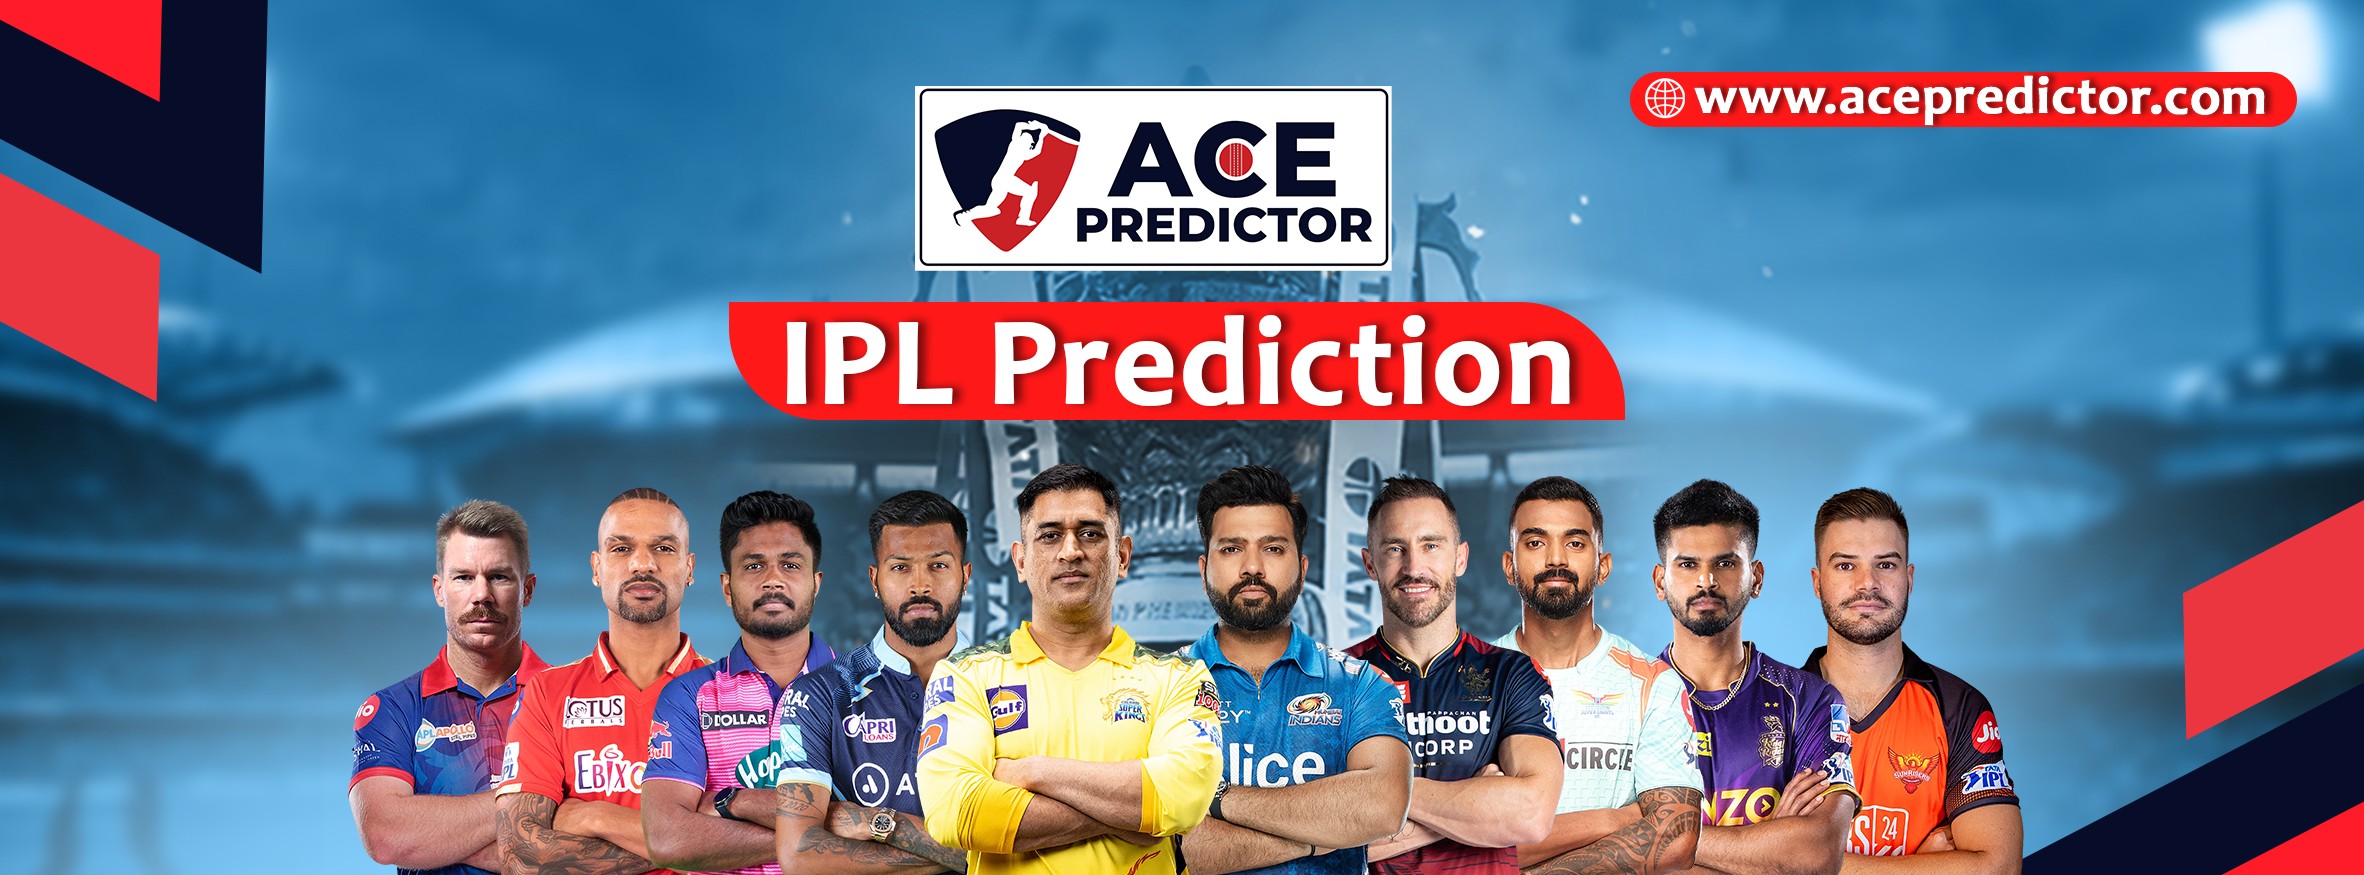 IPL PREDICTION Cover Image